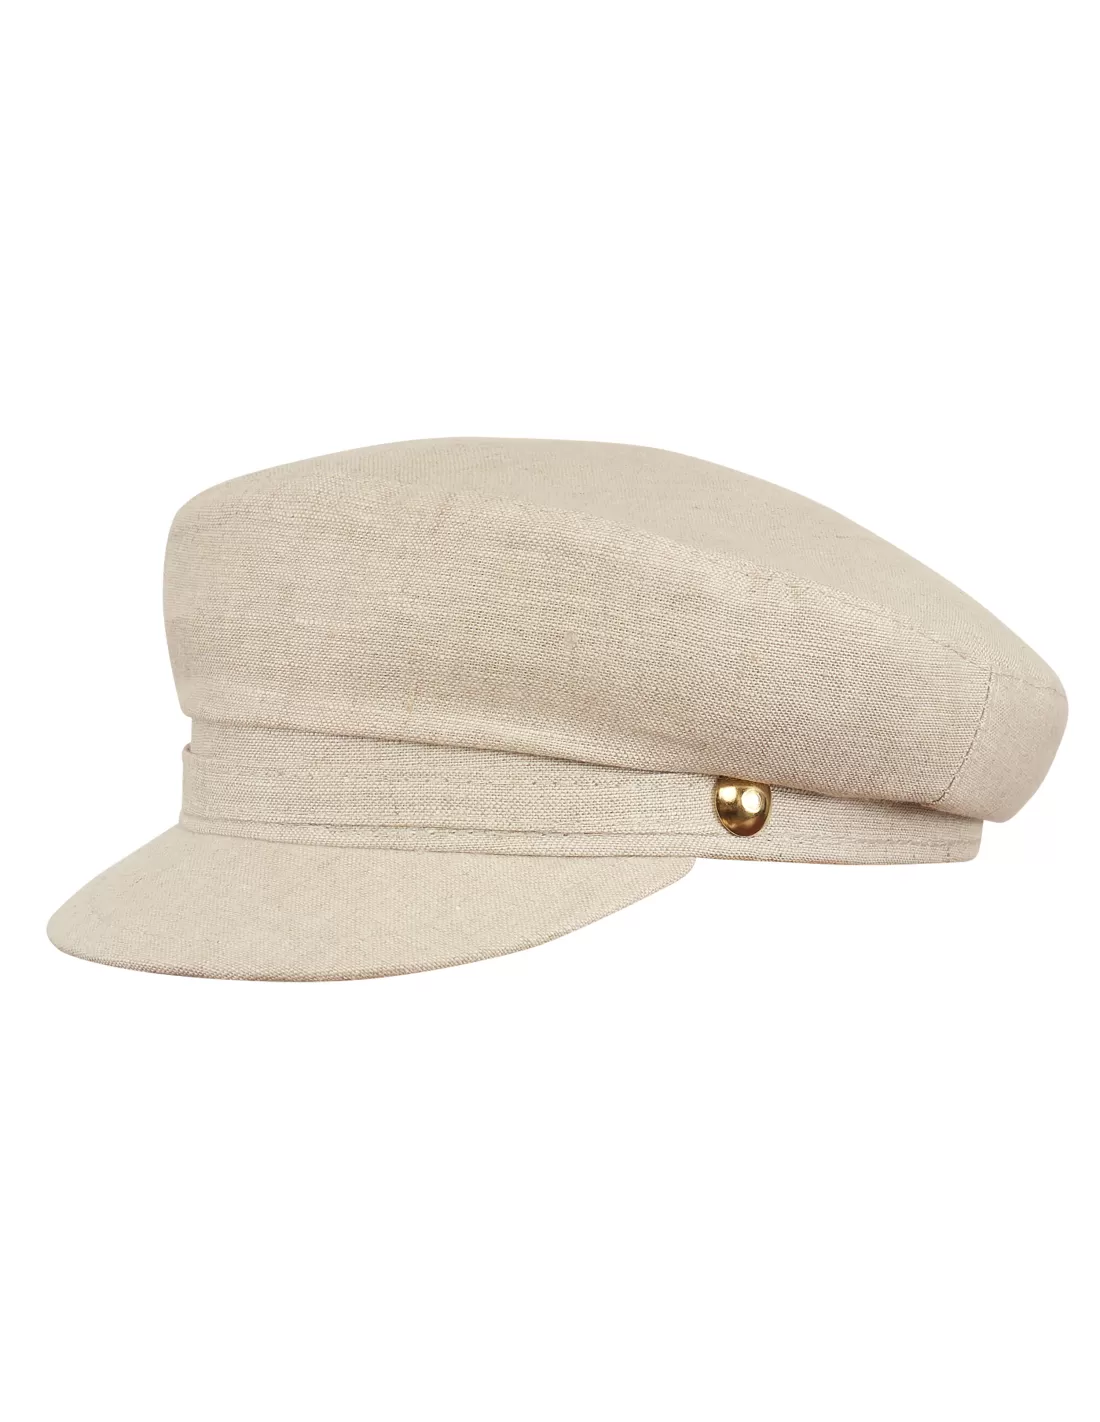 Pireus - summer linen breton cap precisely handmade, fisherman style